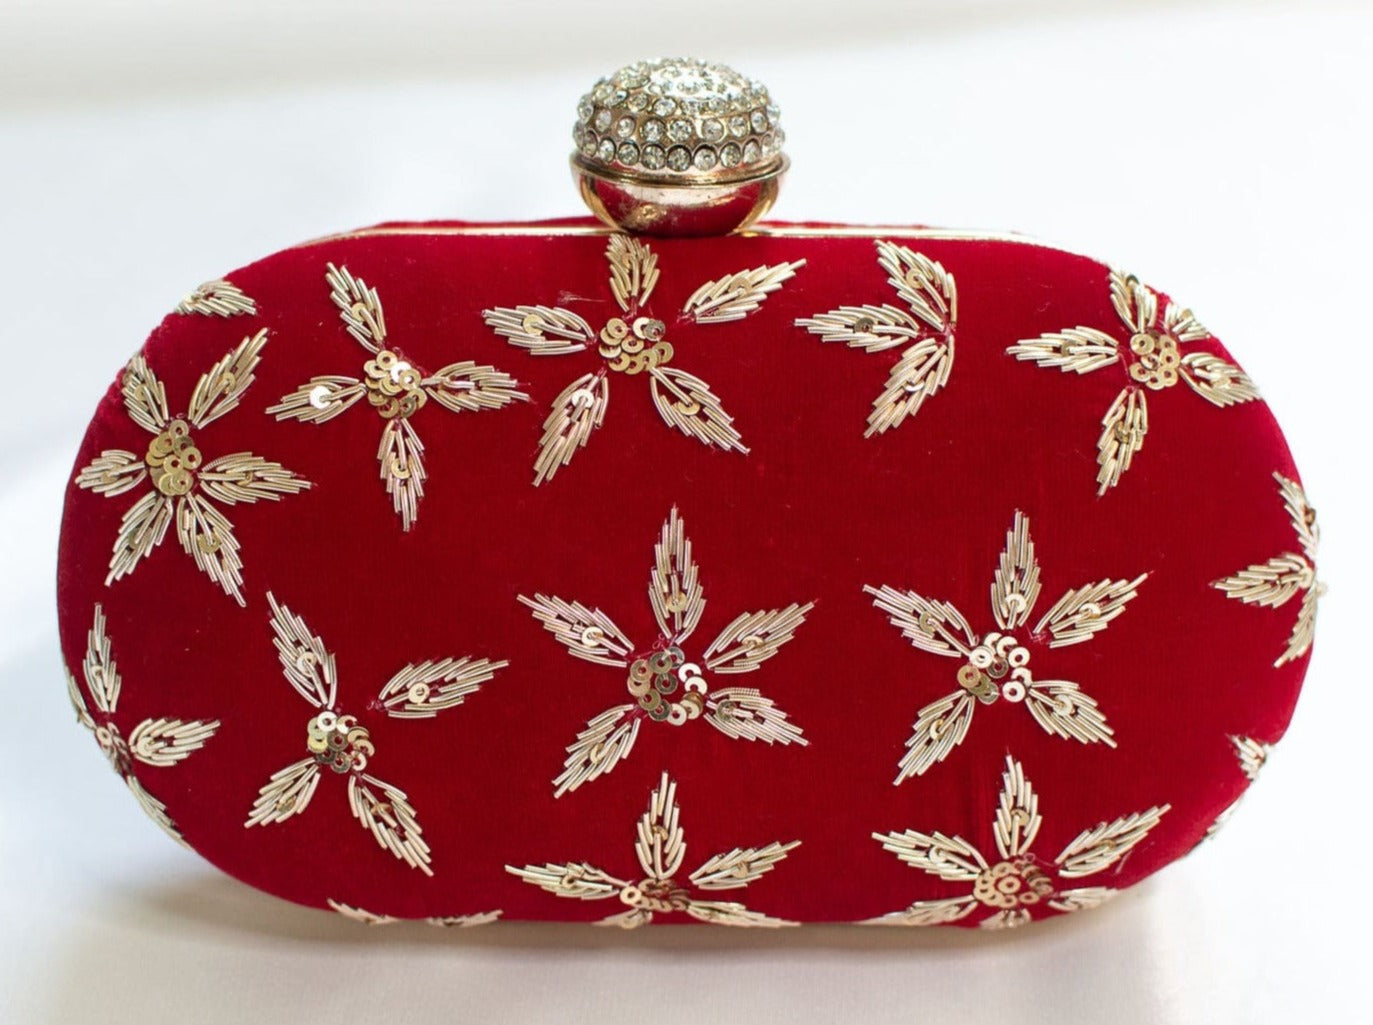 Red Designer Clutch Bag - Minimalistic Ladies evening bag for